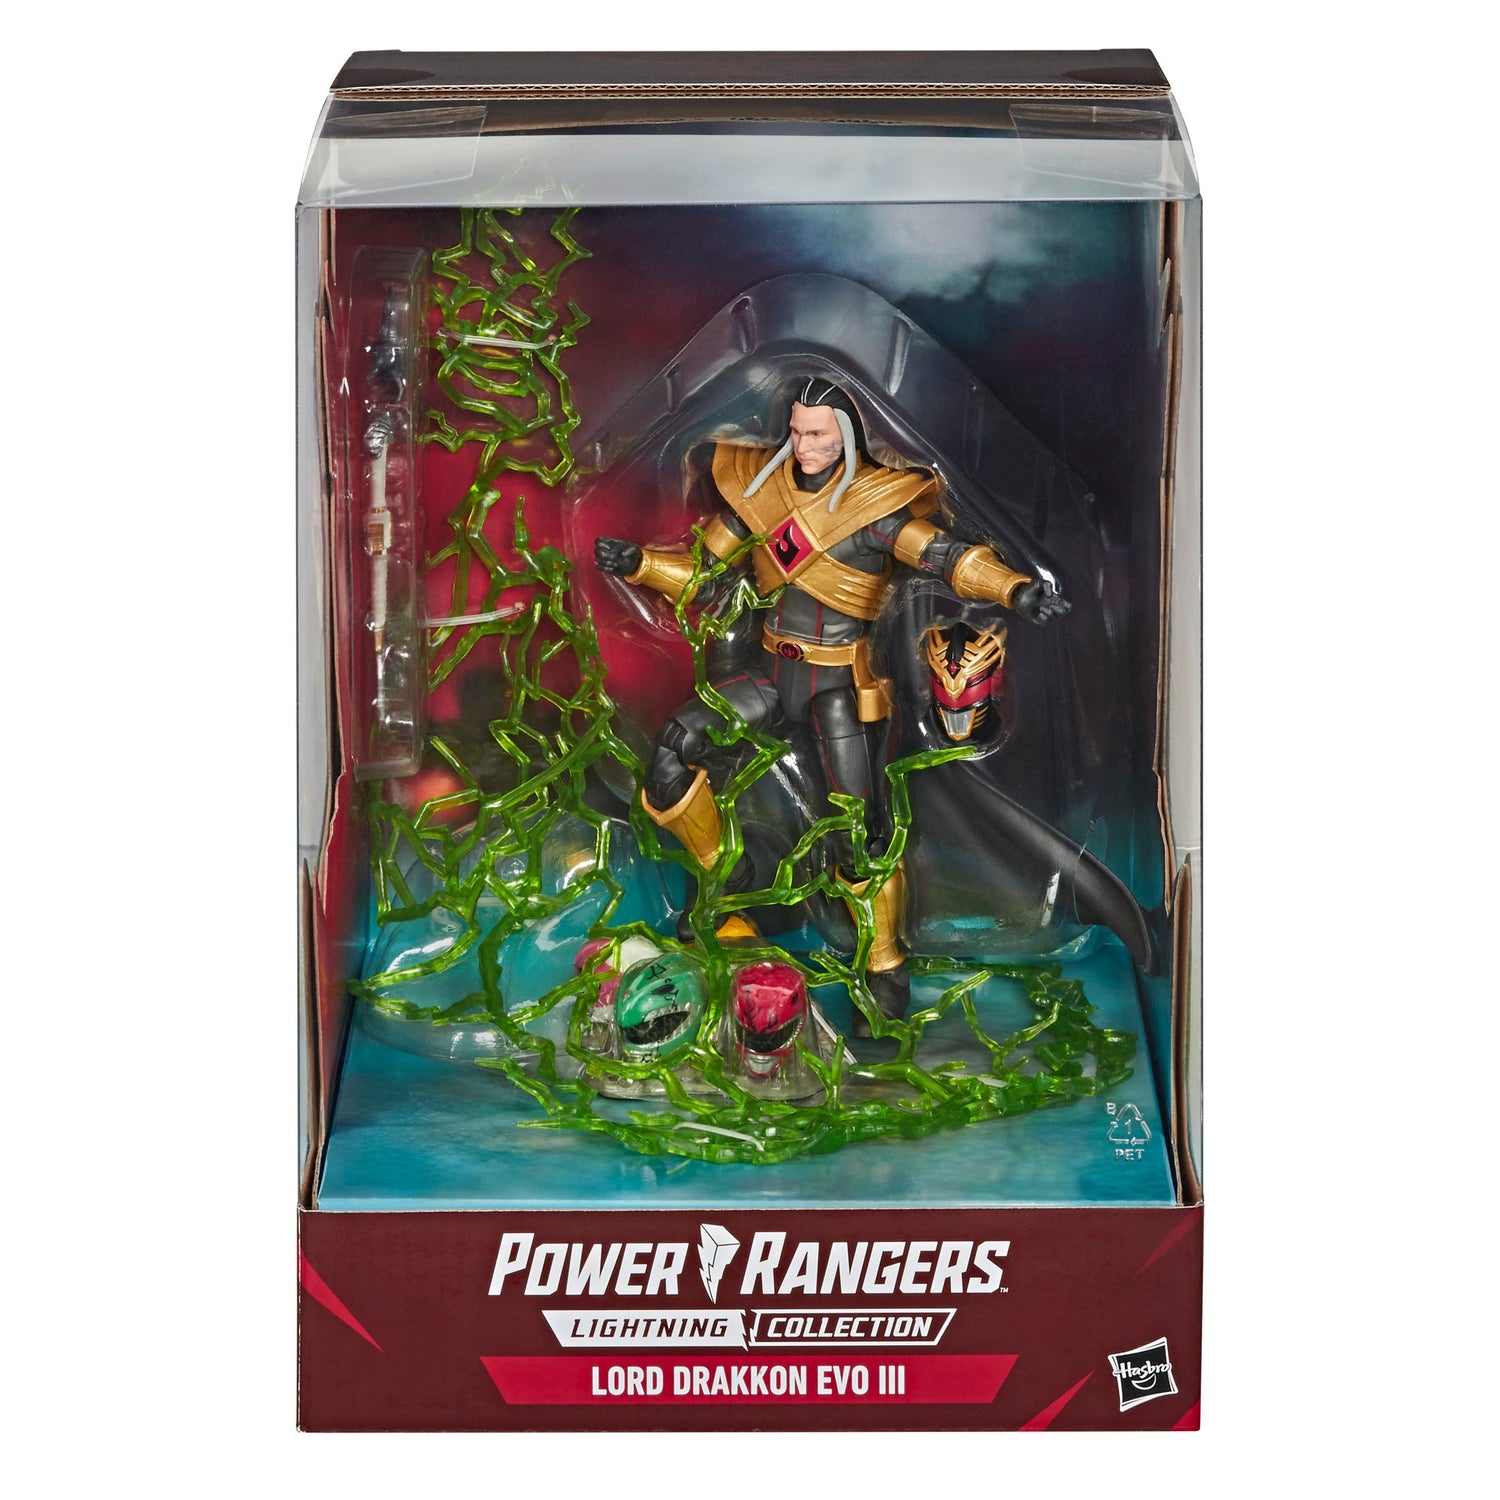 Power Rangers Lightning Collection Mighty Morphin Lord Drakkon EVO III Action Figure